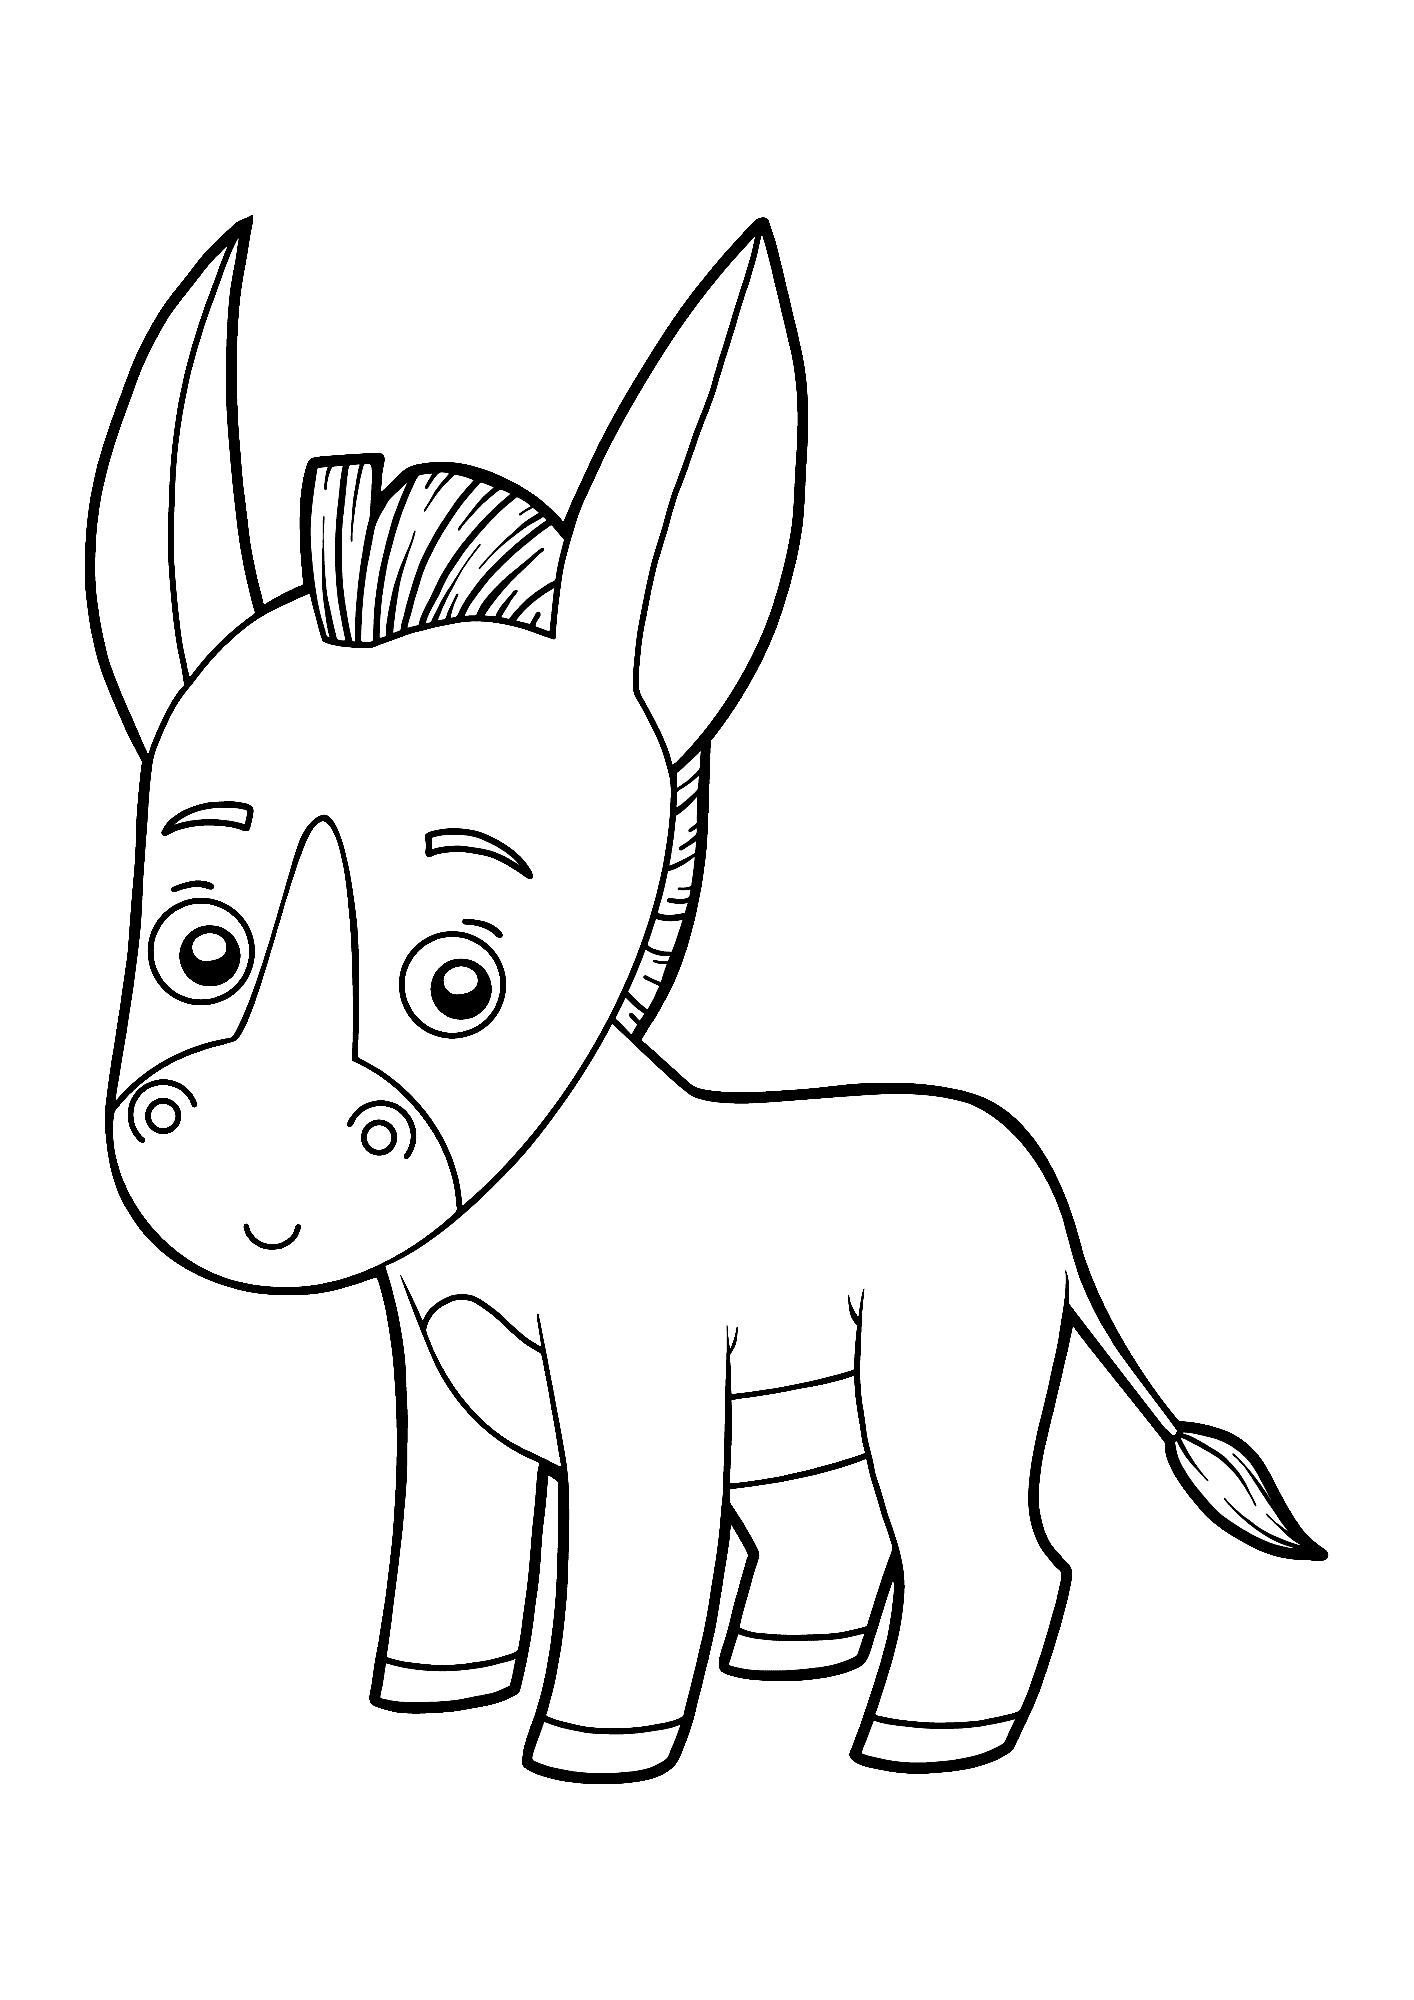 Cute Cartoon Farm Character Donkey Coloring Page